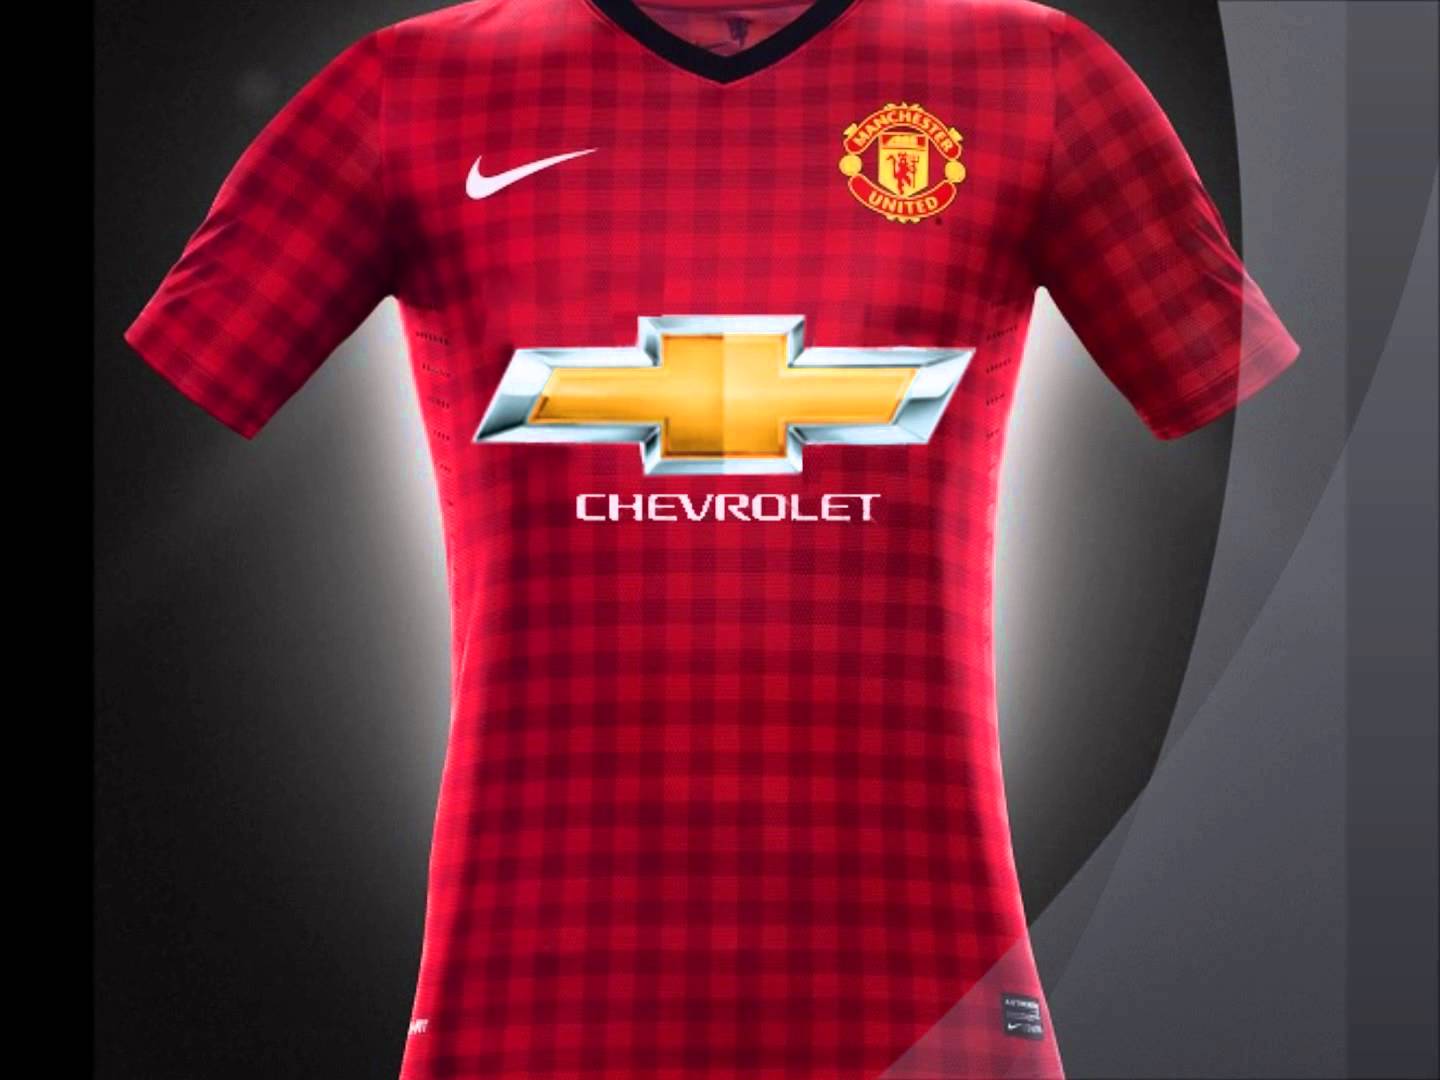 Manchester United 2014 2015 Nike Chevrolet Shirt Jersey. Football